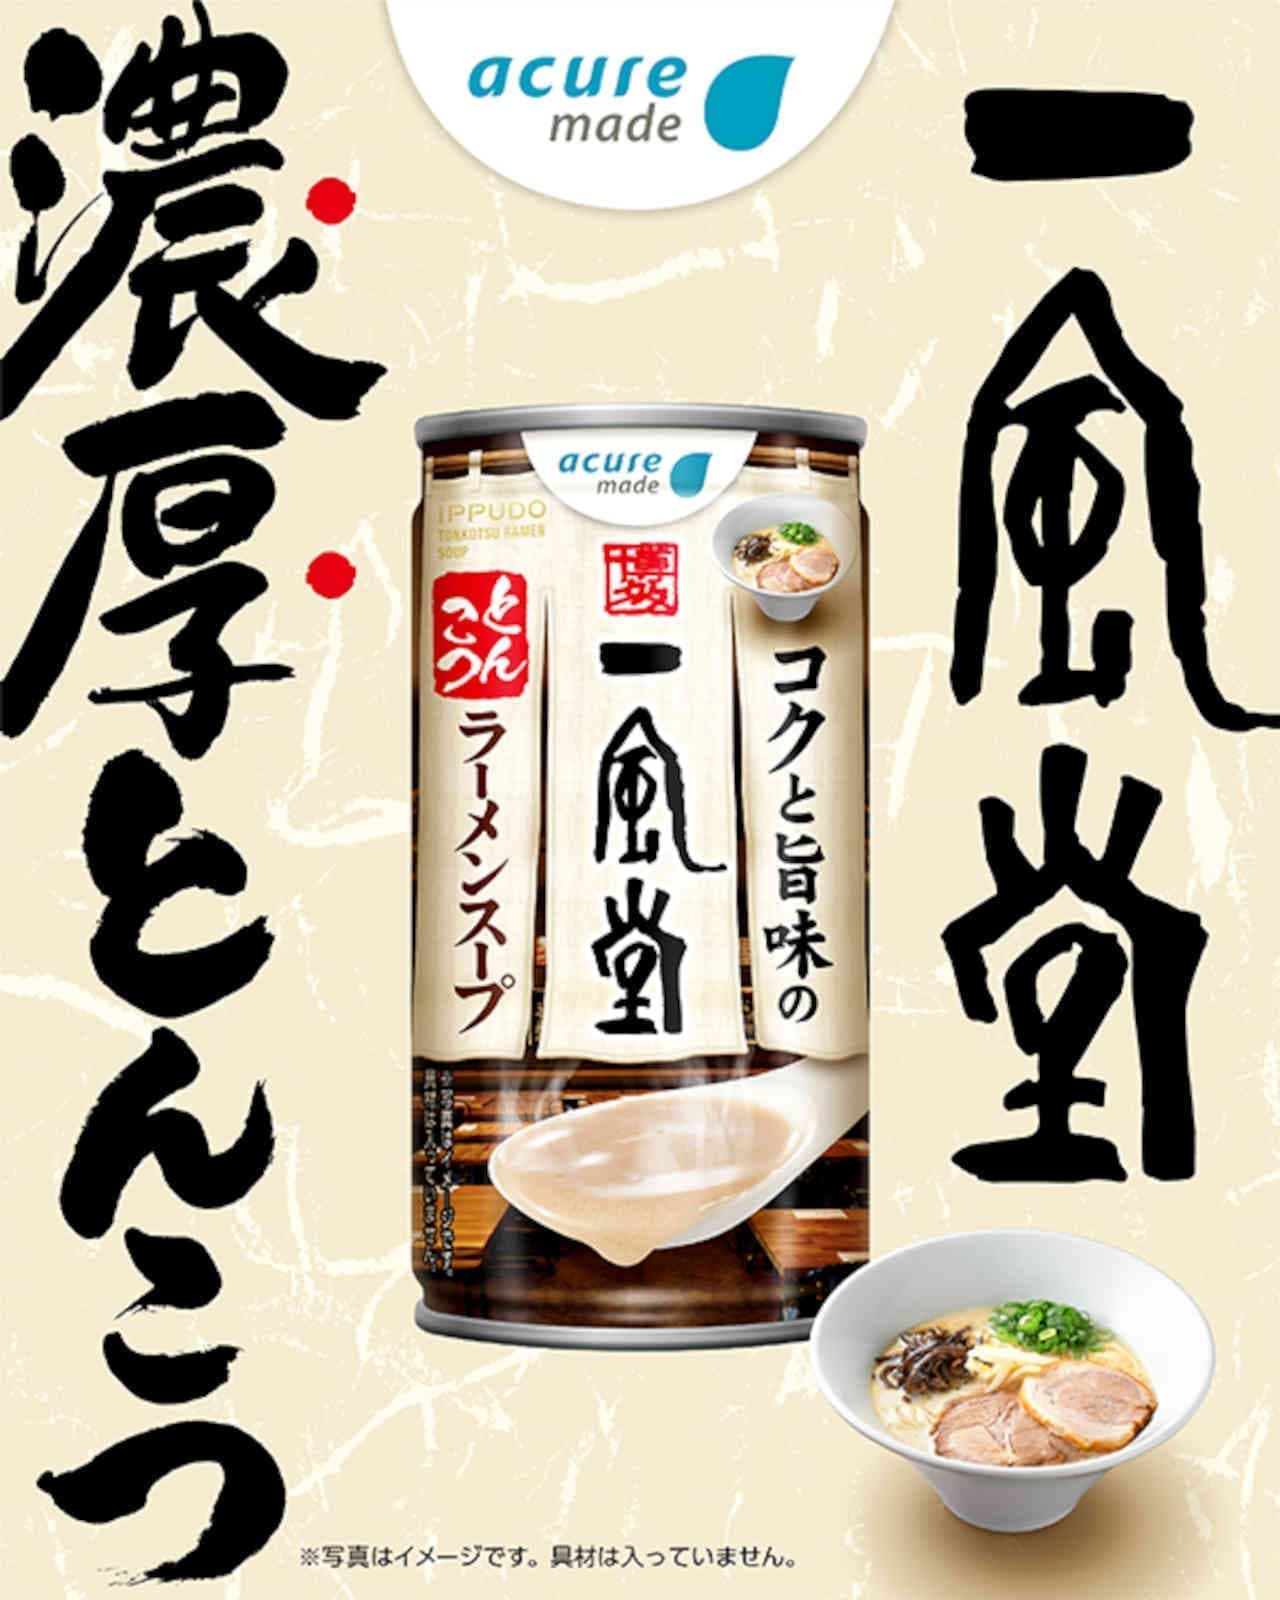 Supervised by Ippudo "Ippudo Tonkotsu Ramen Soup with Rich and Umami"